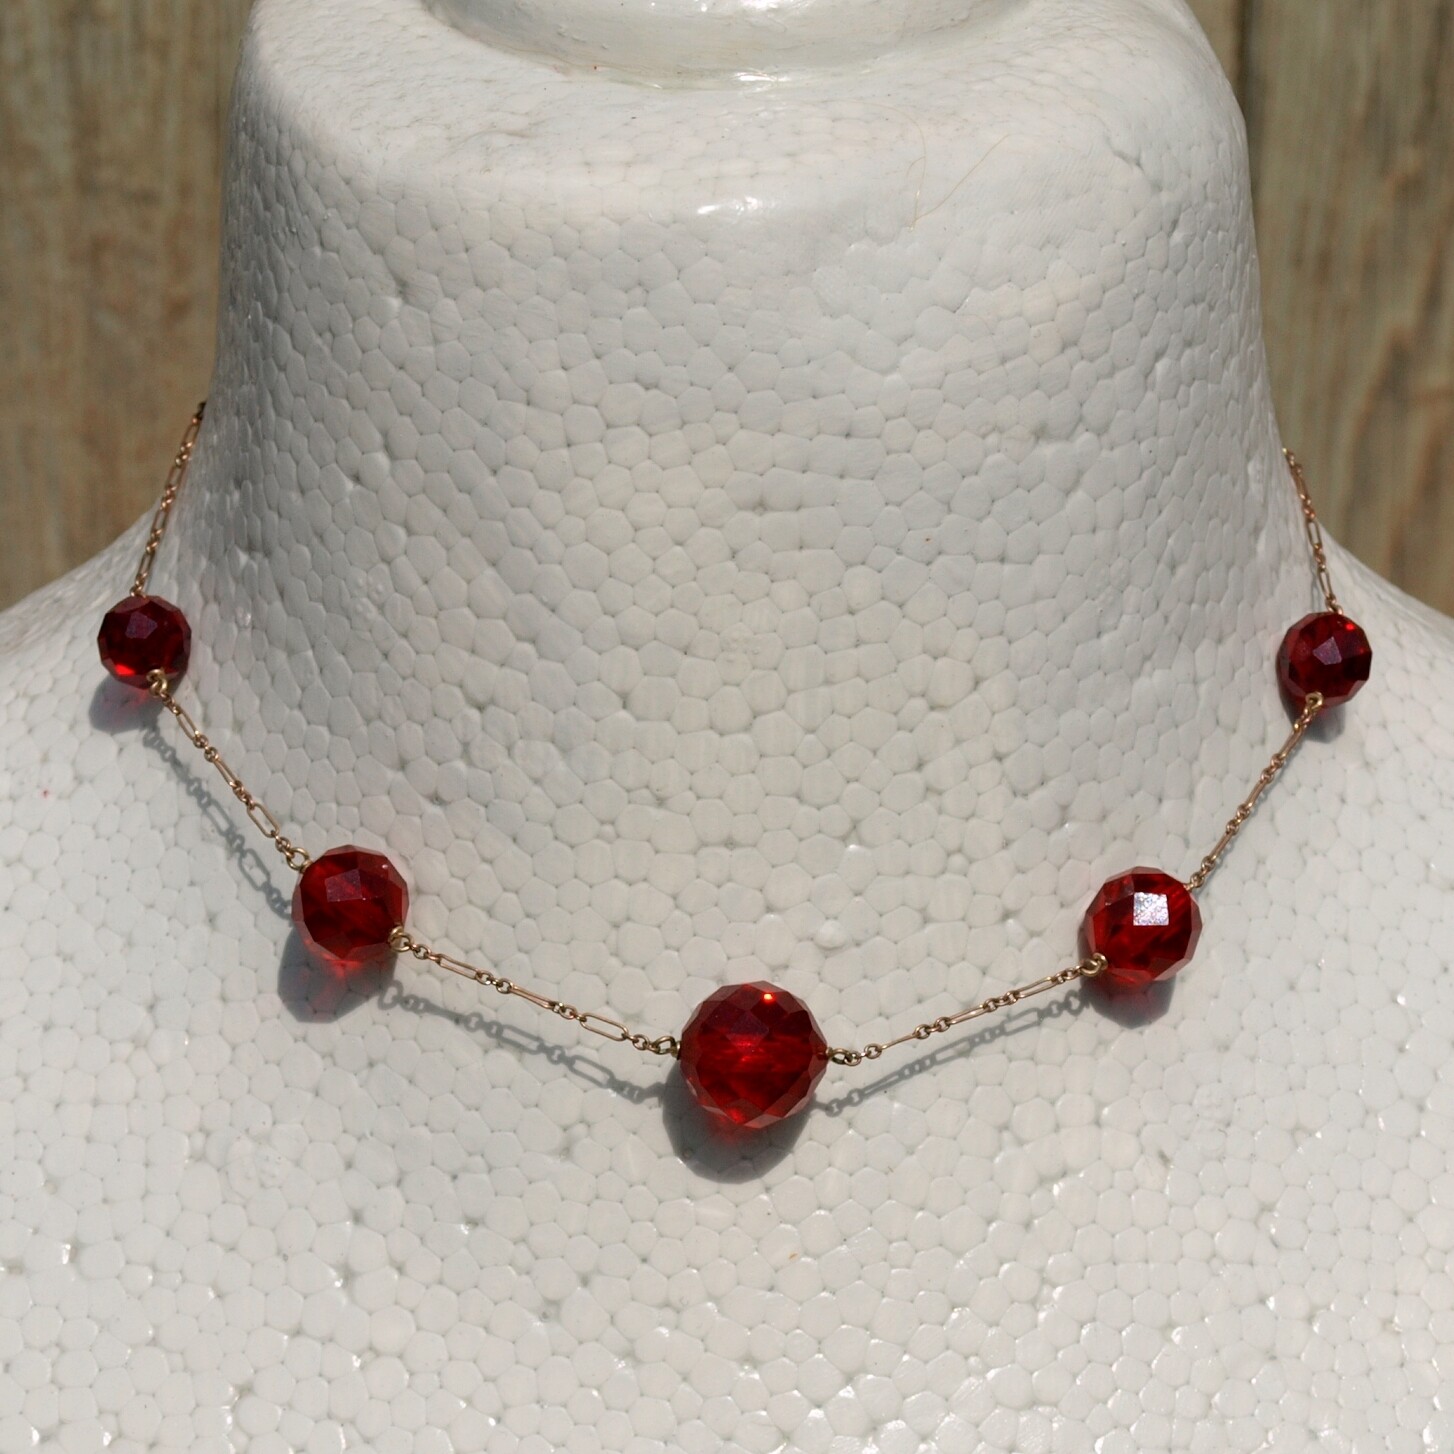 Antique Goldtone Chain & Handmade Faceted Red Glass Globular Bead Choker